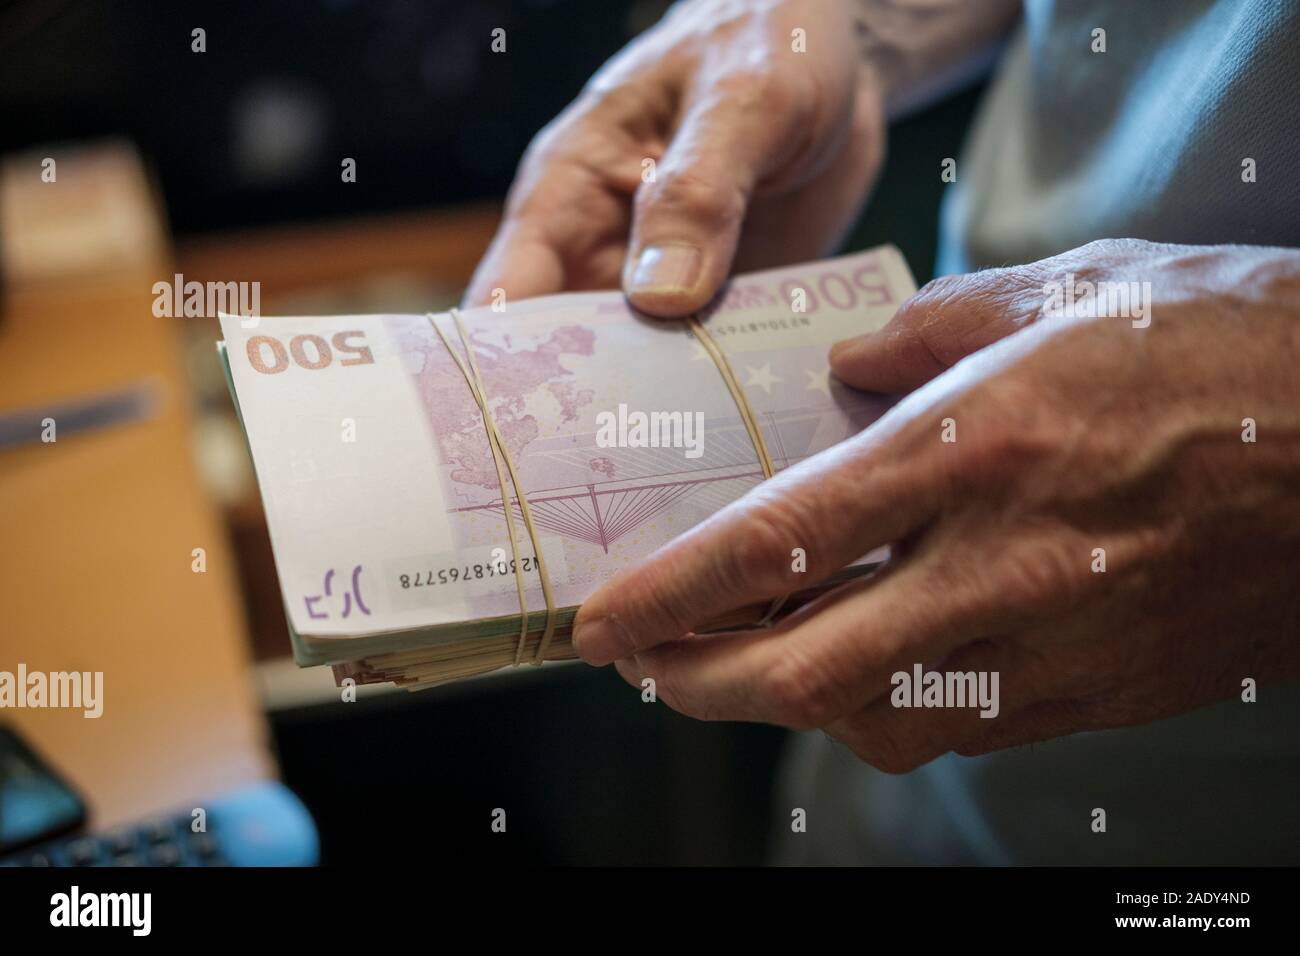 Mann hält ein Bündel Bargeld Euro-Banknoten - selektive Fokus Stockfoto